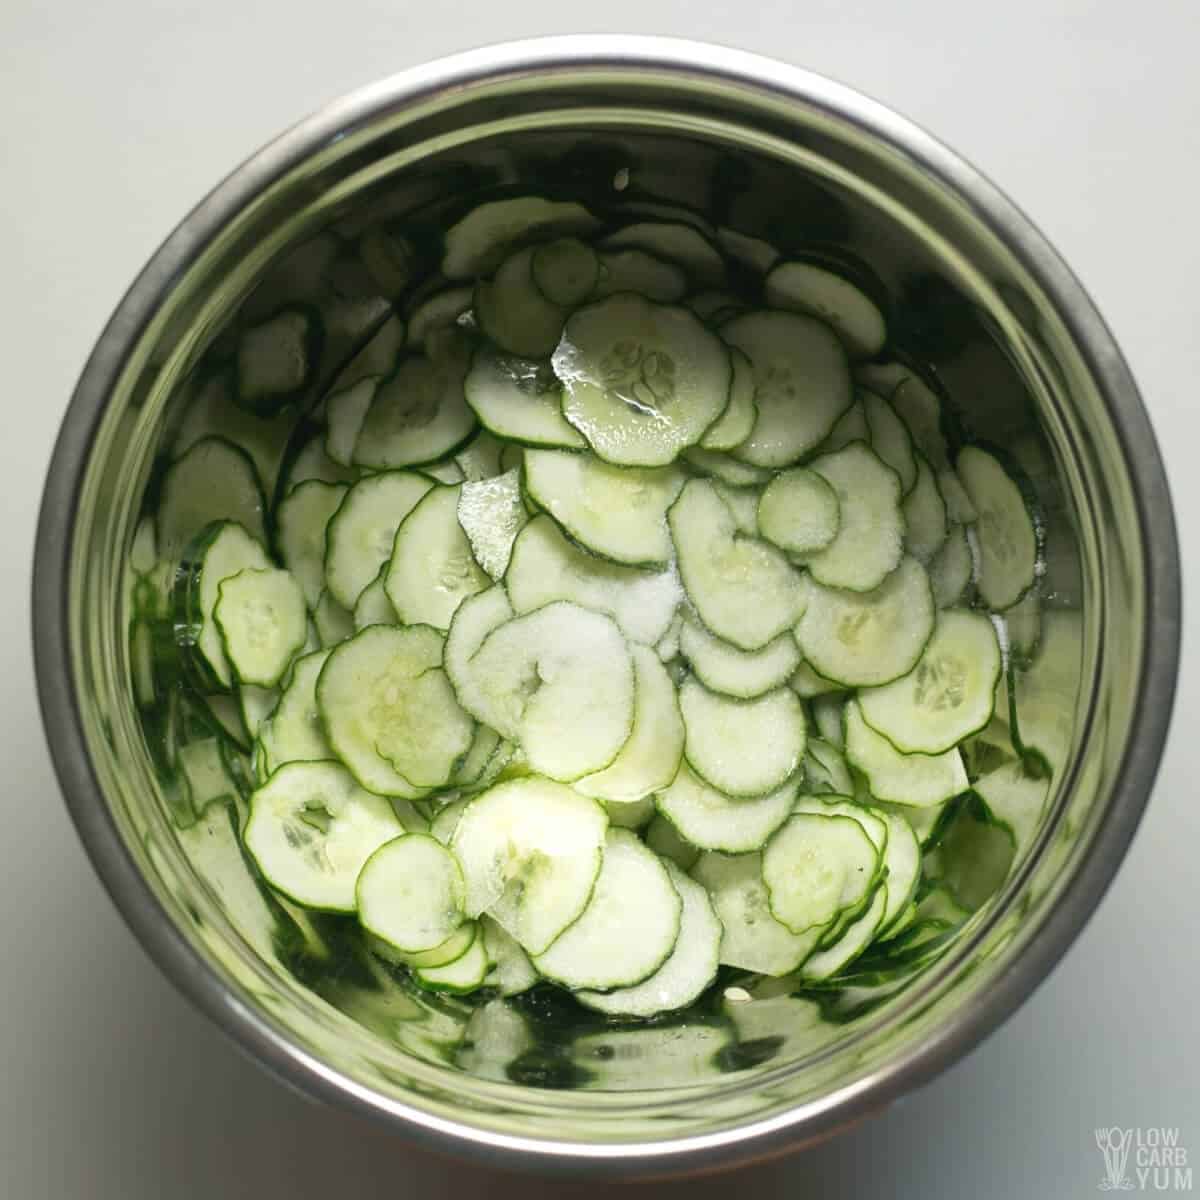 adding the salt and vinegar seasoning to cucumber slices